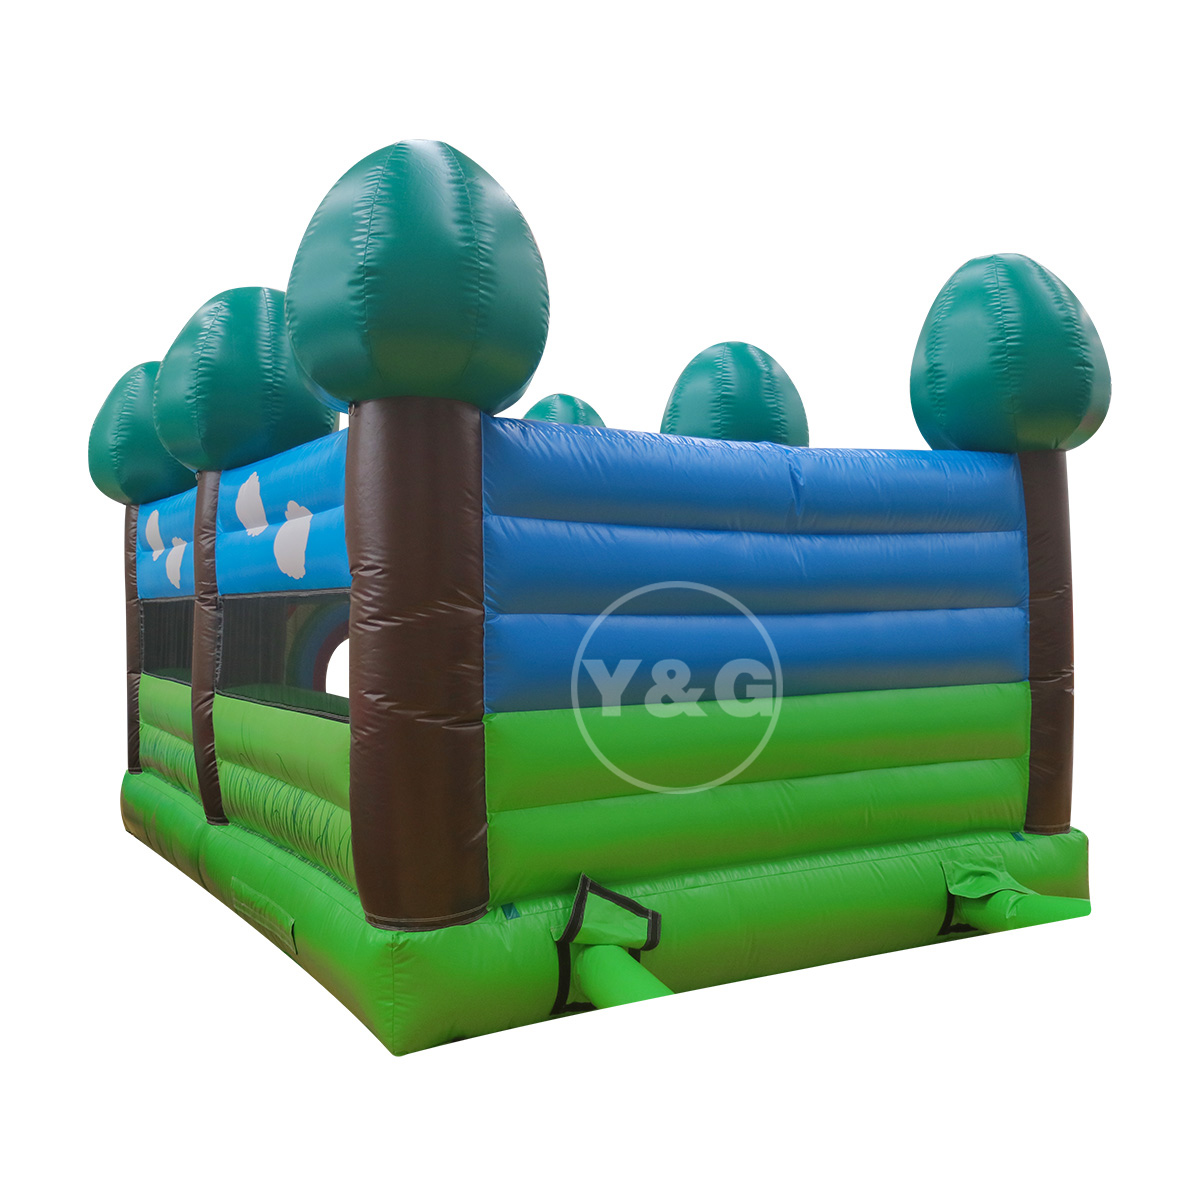 funny inflatable bounce houseYG-100